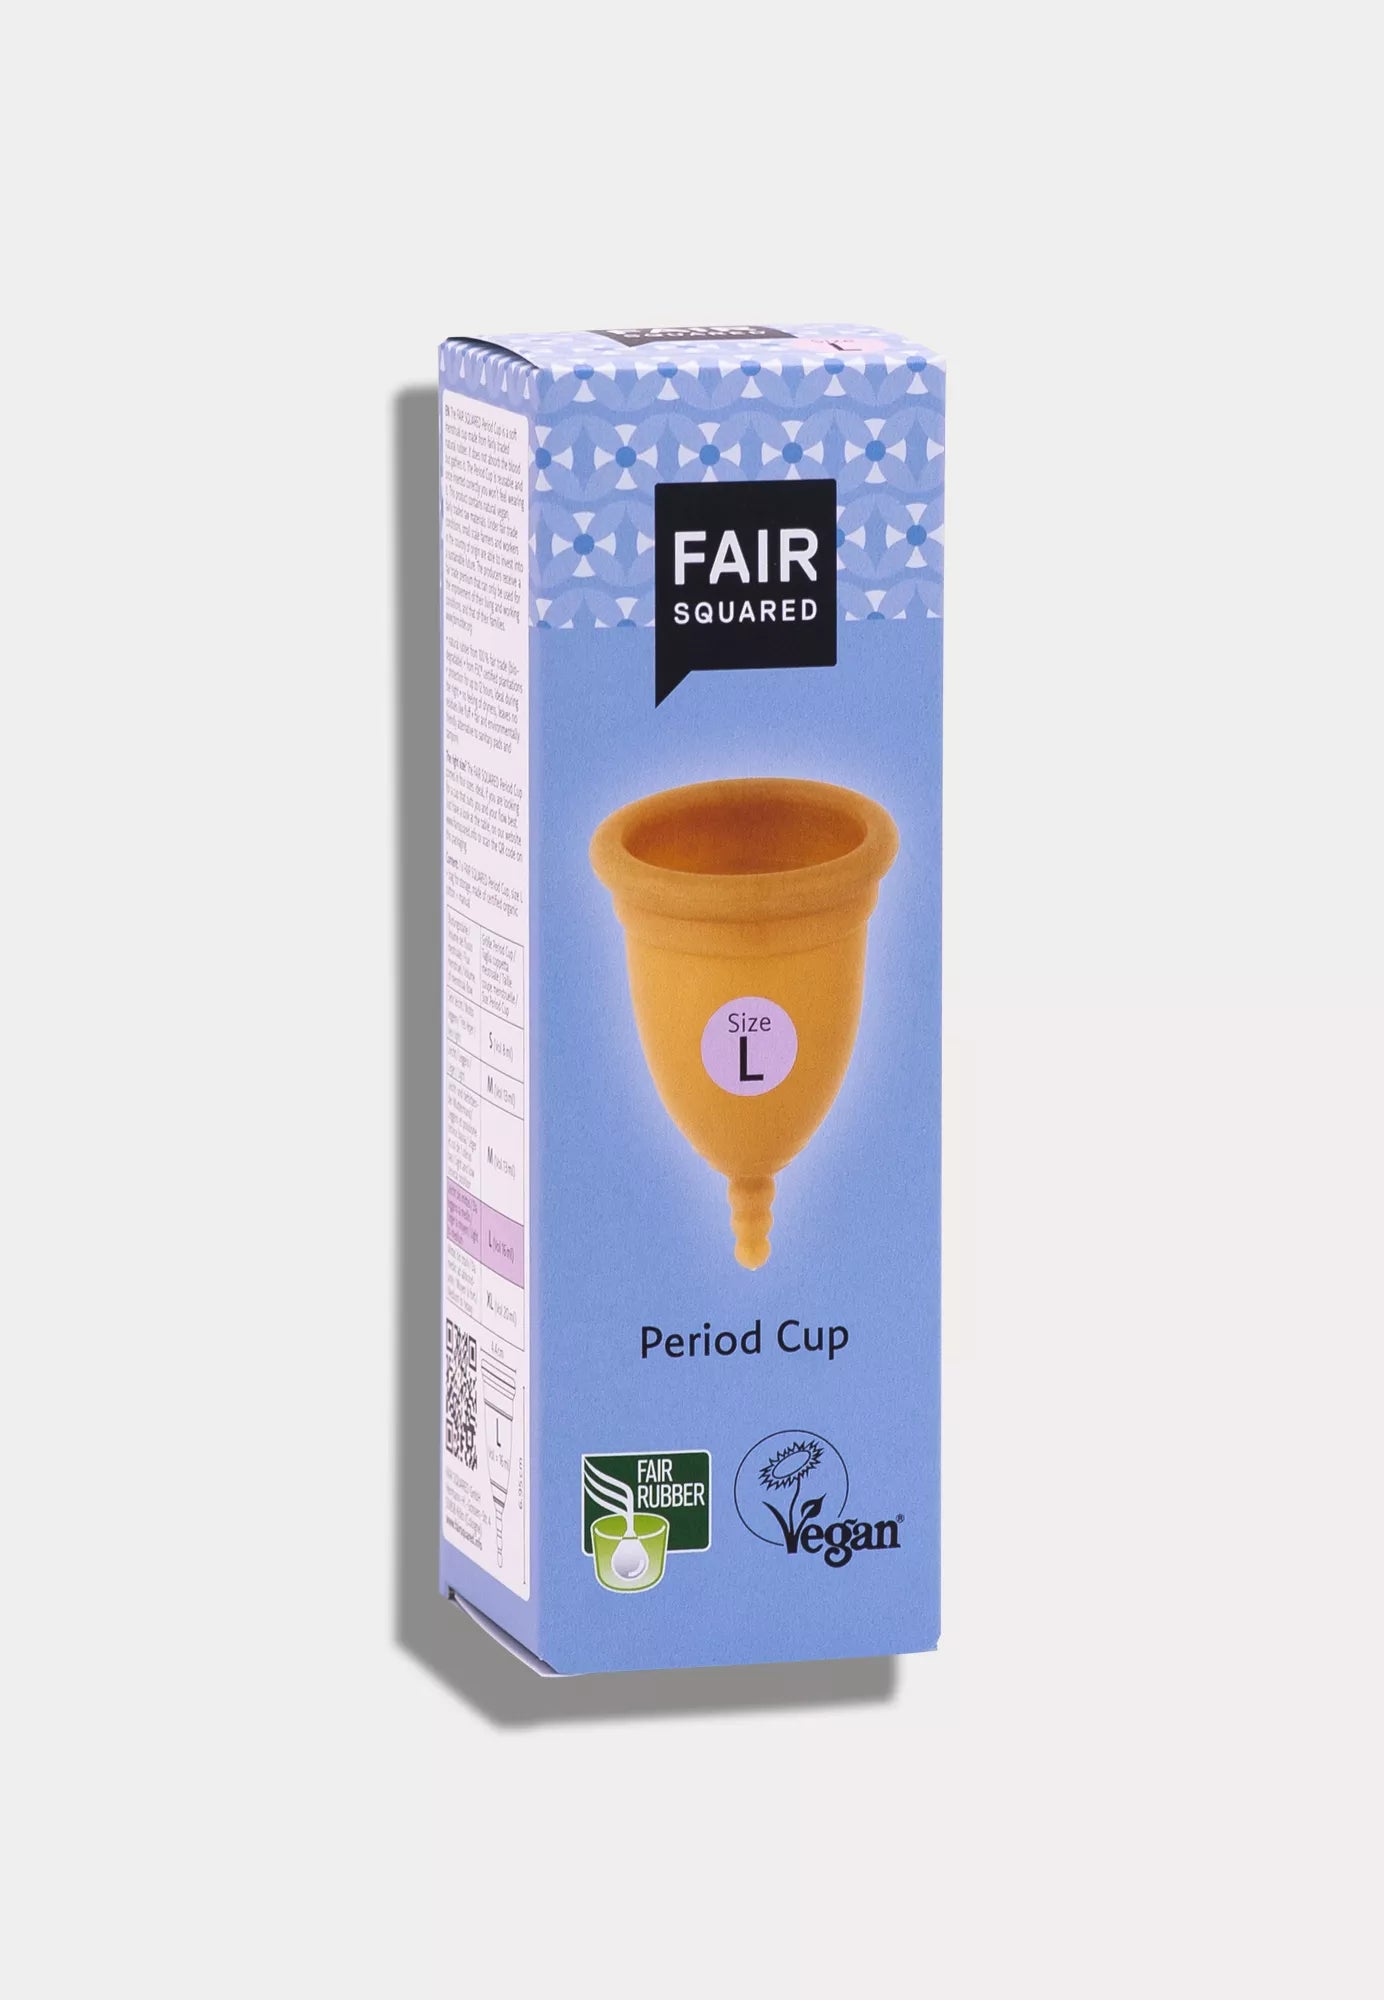 Period Cup menstrual cup